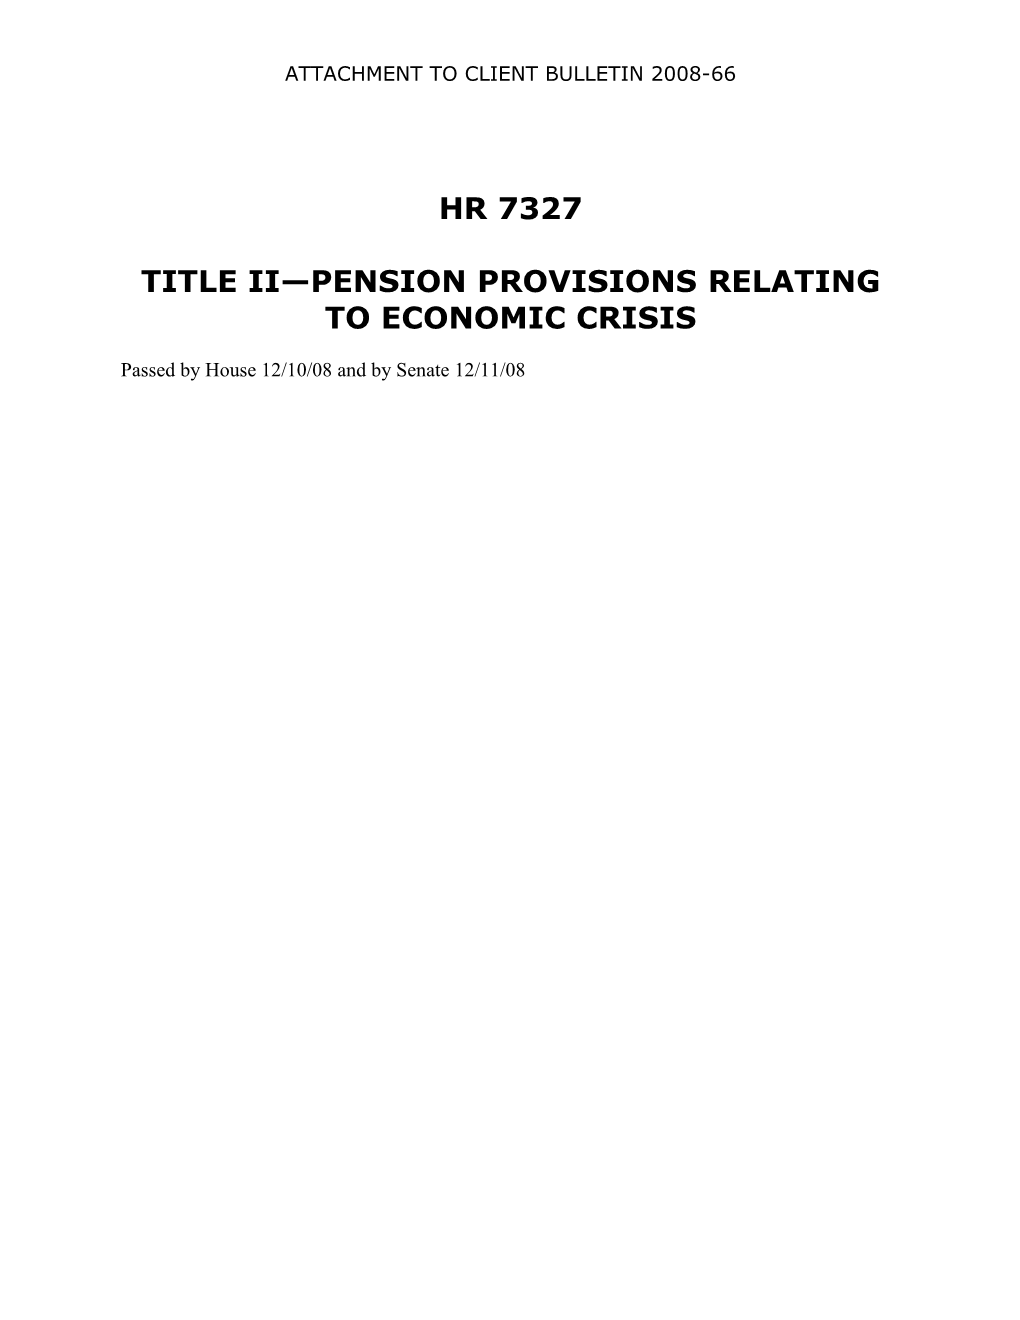 Title Ii Pension Provisionsrelating to Economic Crisis